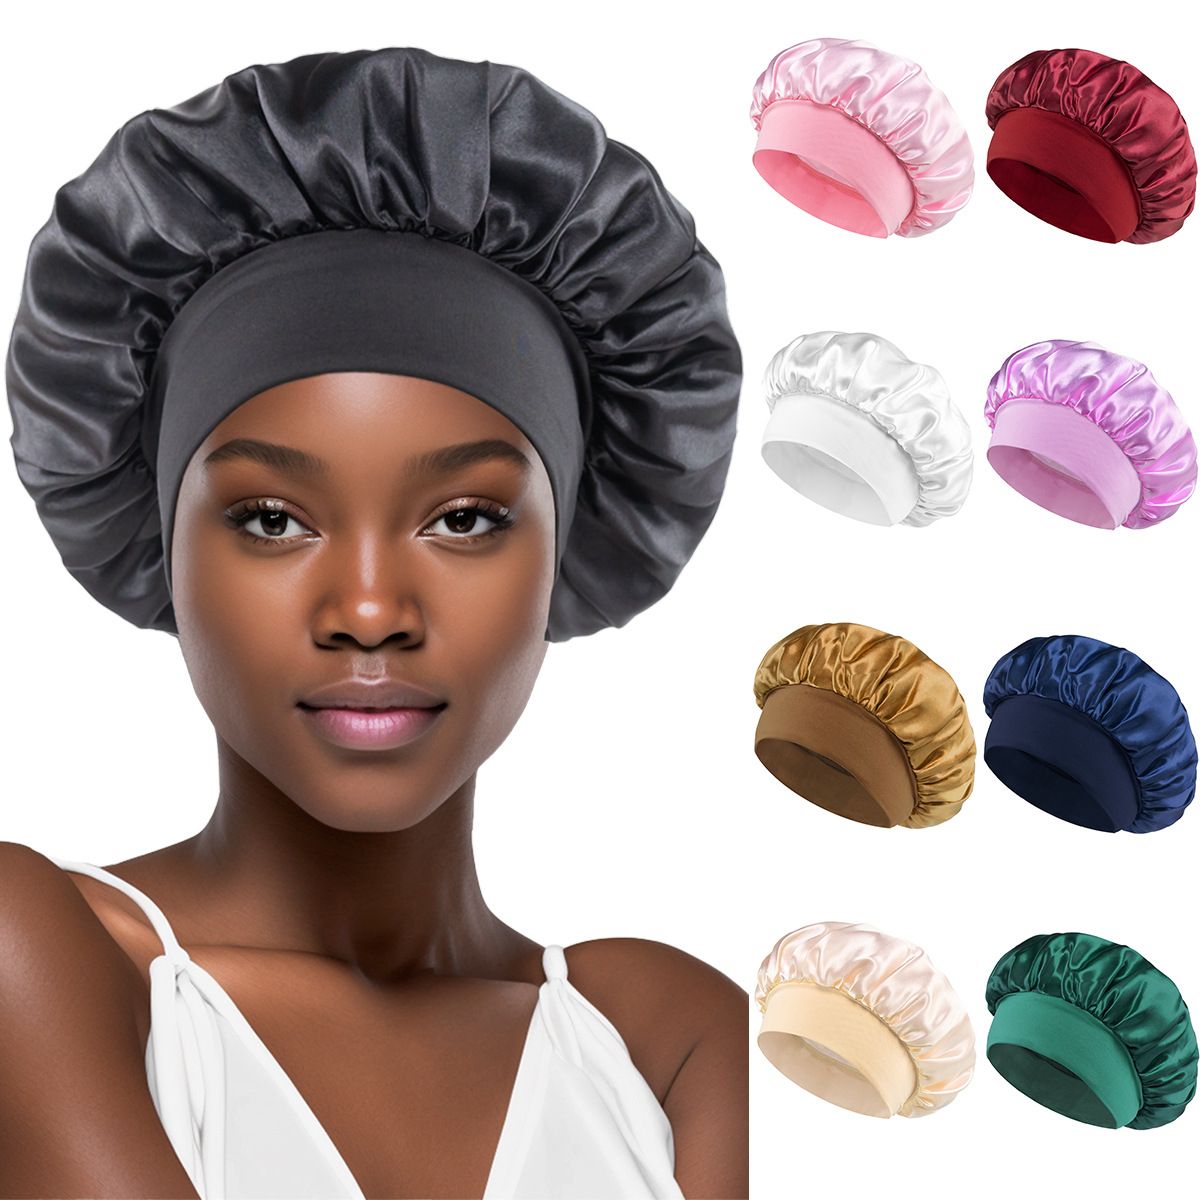 Newly Satin Night Hair Cap Women's Solid Sleeping Hat Sleep Care Bonnet Nightcap For Women Unisex Cap